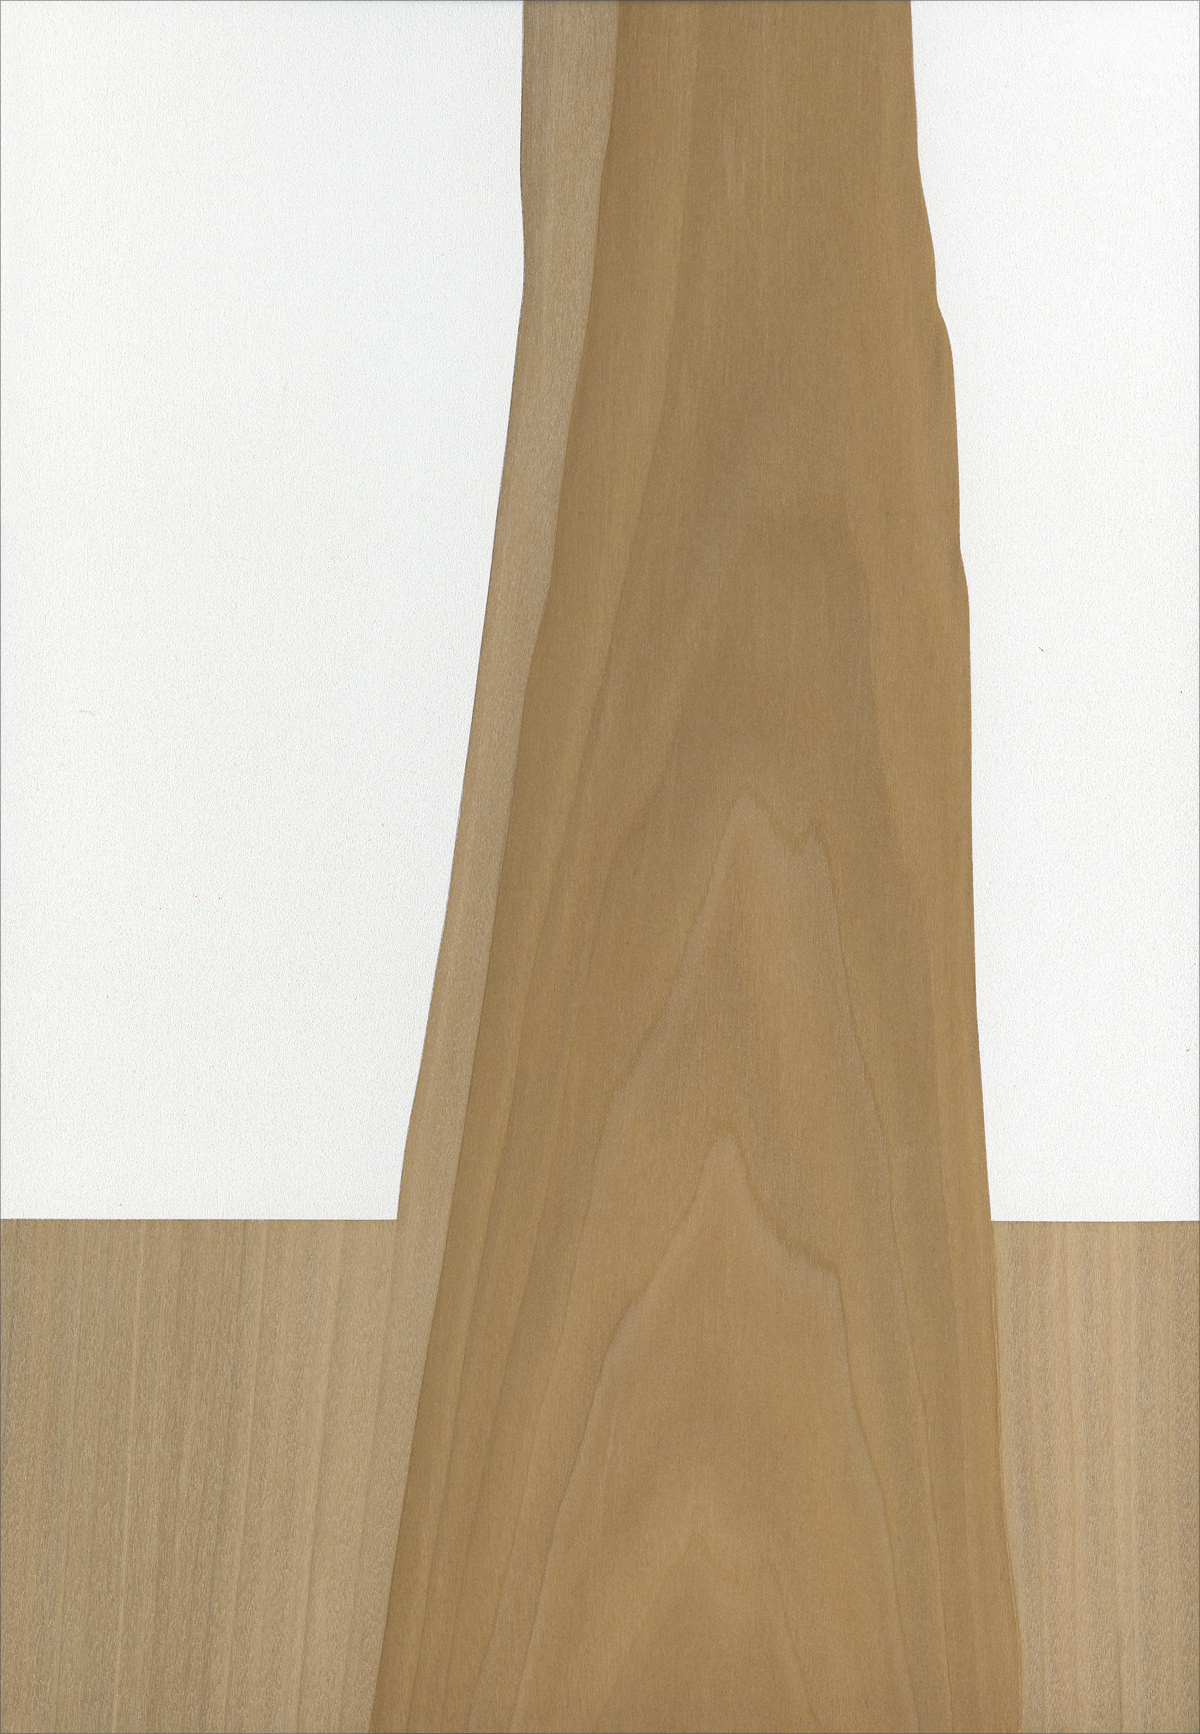   Liniment (Rabatement #2)  Gesso/Lacquer/Wood 7” x 10” x 1” 2017 